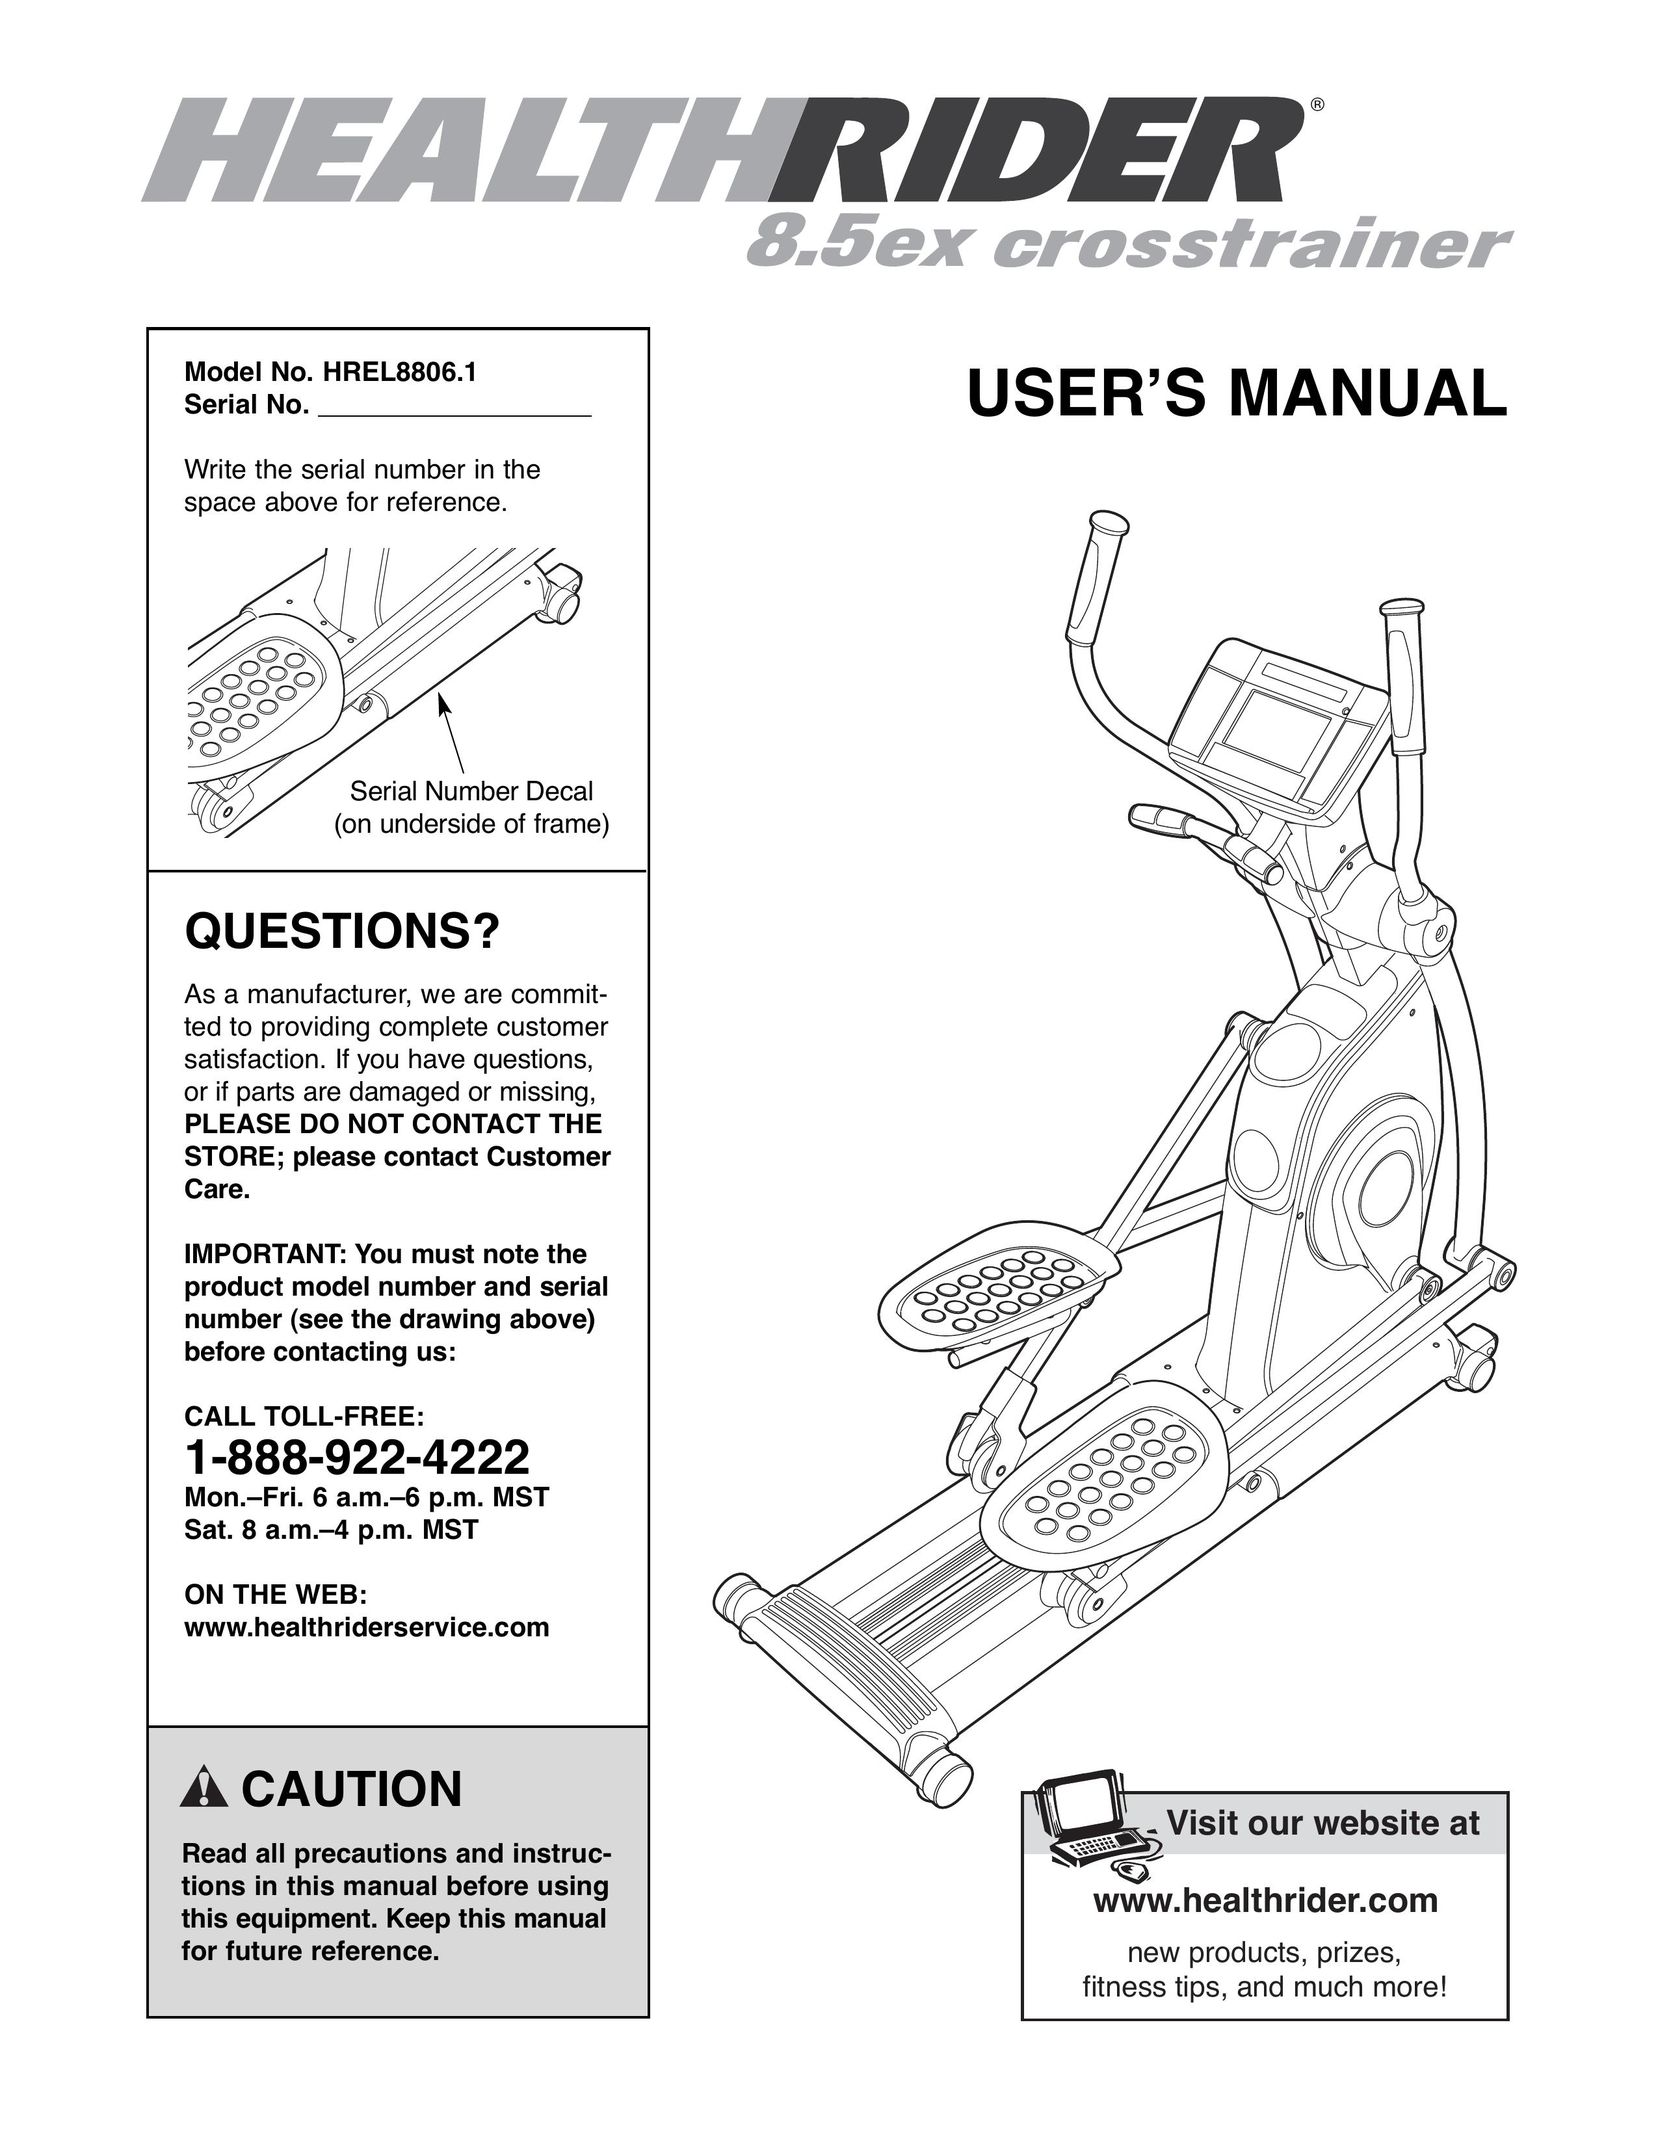 Healthrider HREL8806.1 Home Gym User Manual